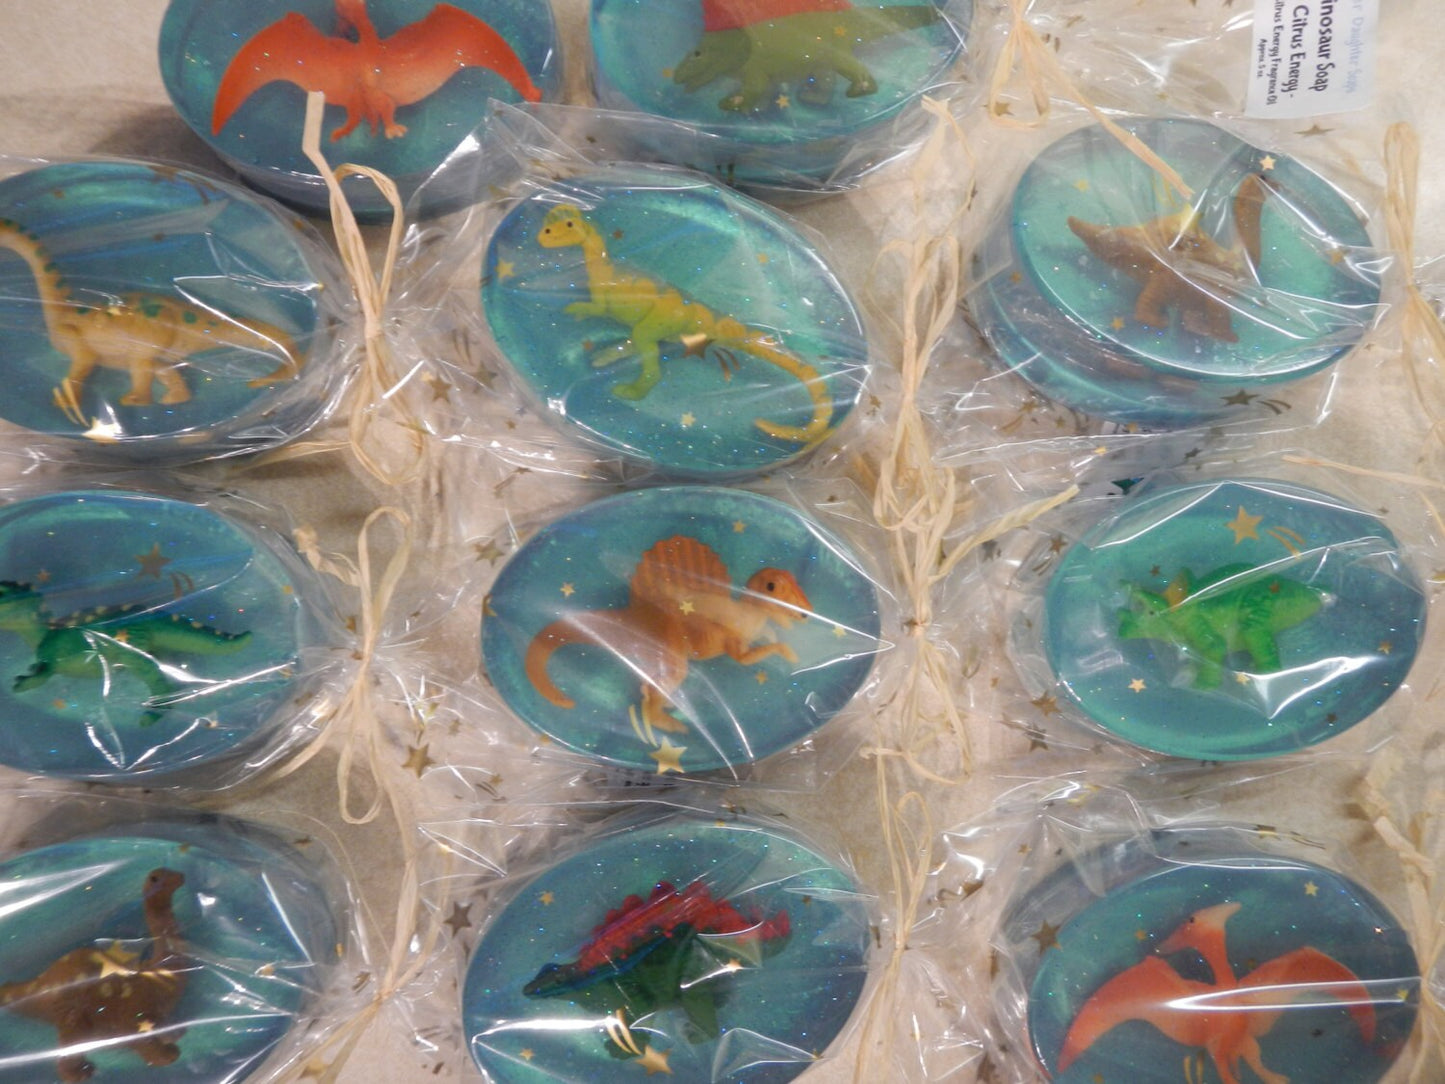 Dinosaur Soap, transparent soap with Toy Dinosaur,Birthday Gift soap, colourful dinosaur, handmade on Vancouver Island,Victoria, B.C. Canada